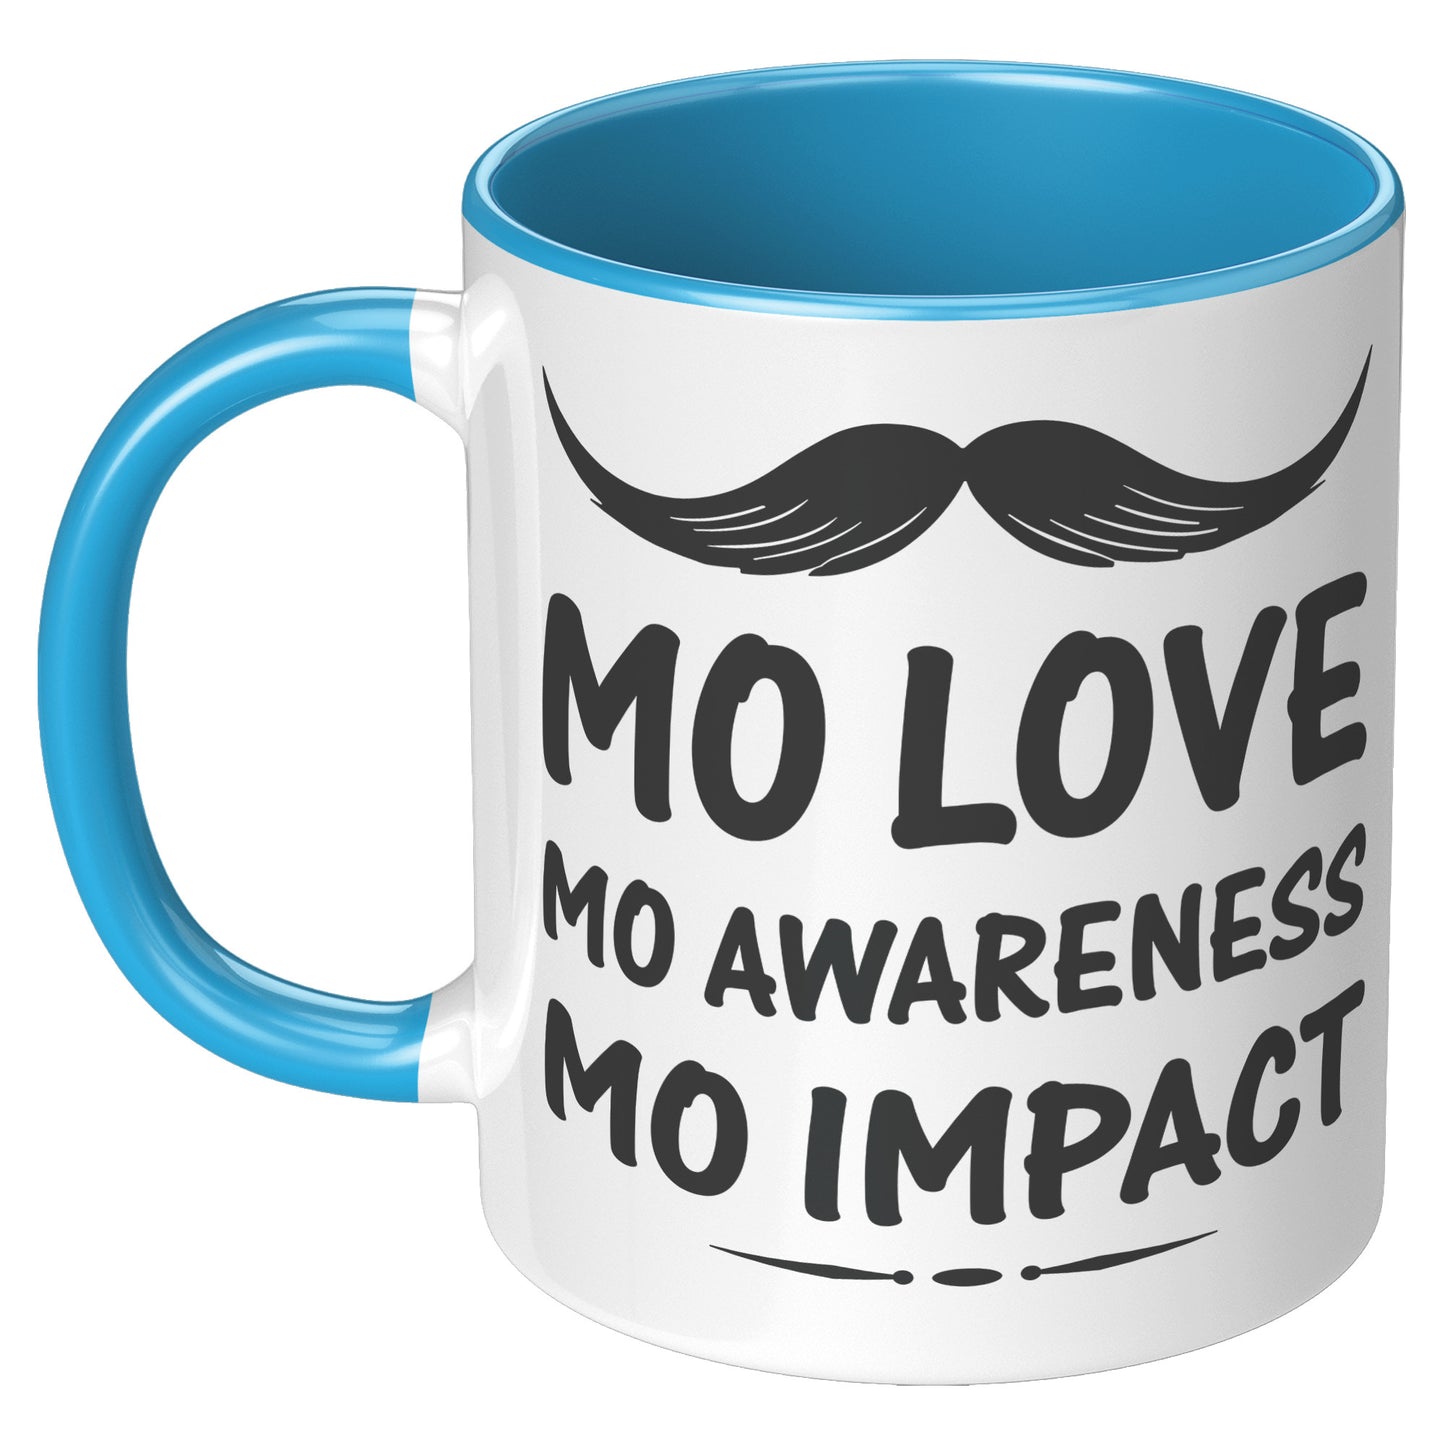 11oz Accent Mug Movember Mo Love Mo Awareness Mo Impact Left-Handed